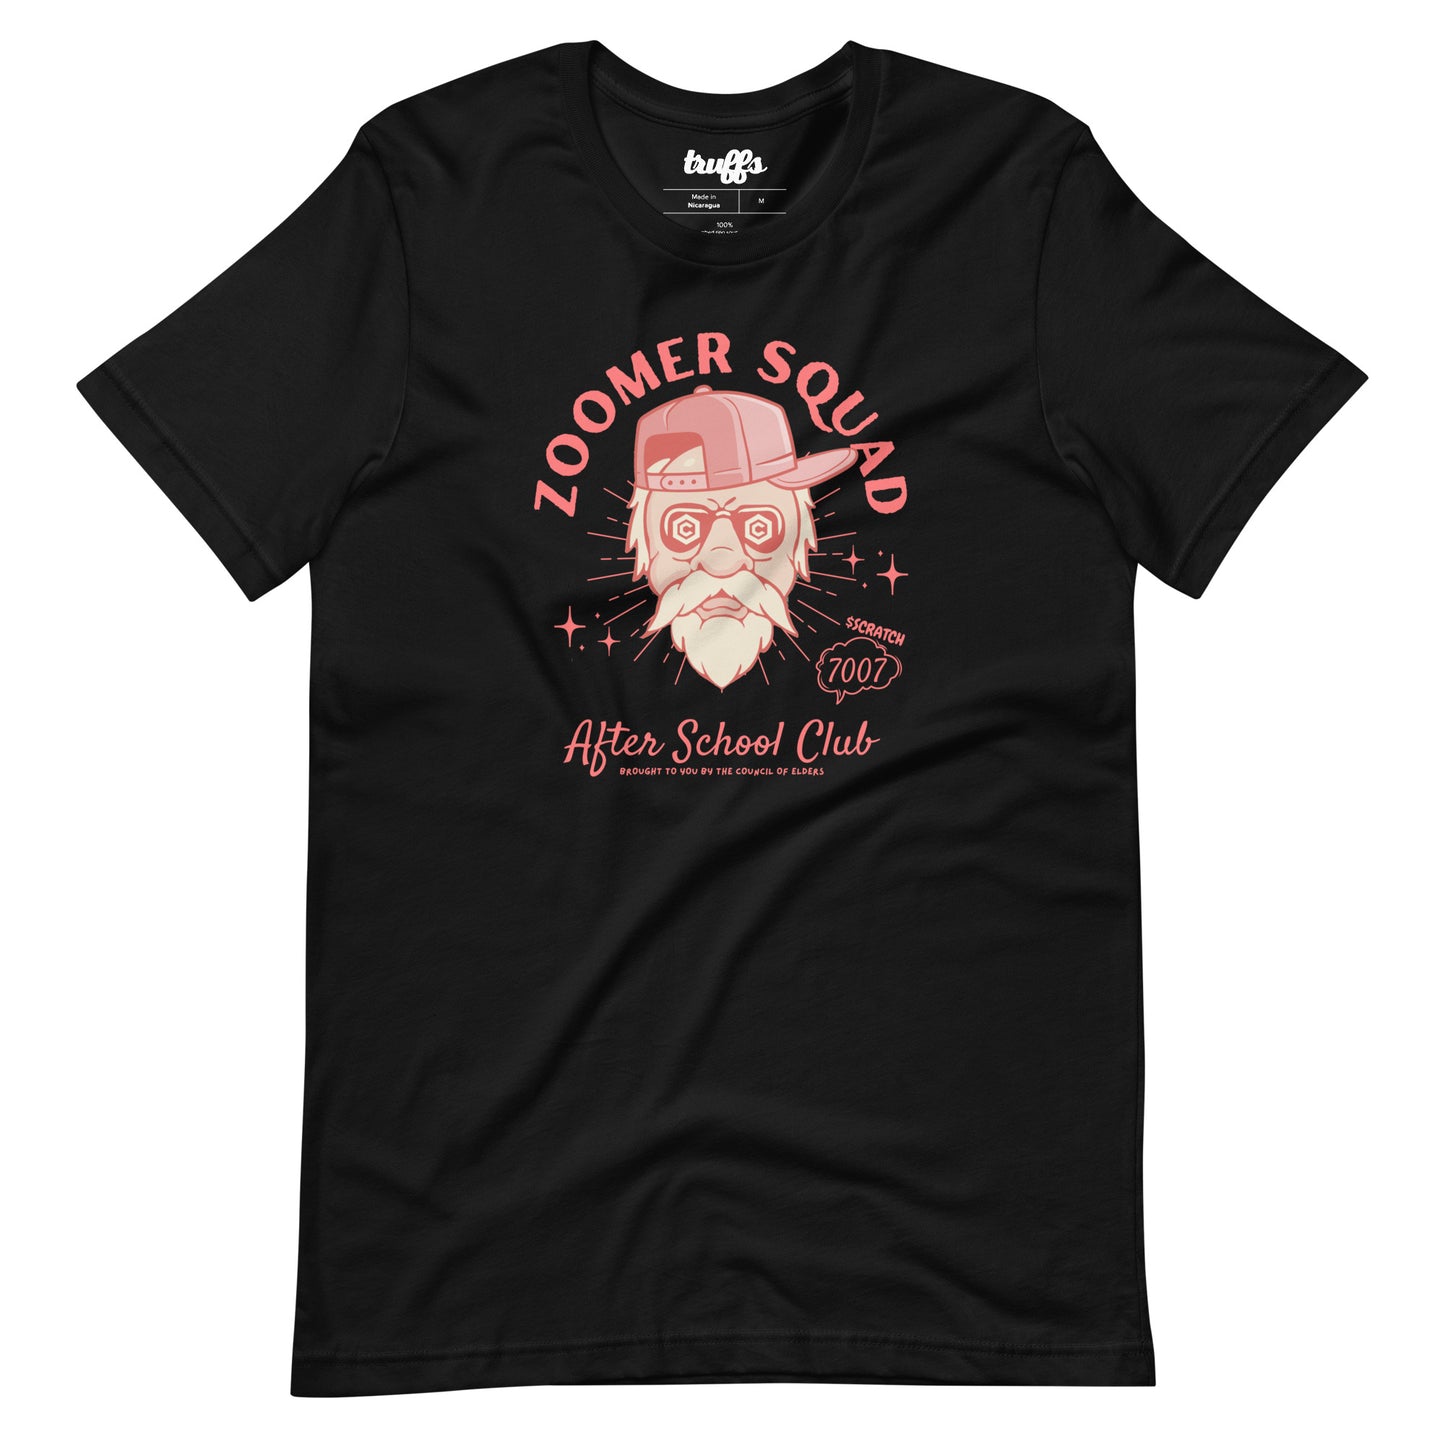 Zoomer Squad - After School Club Unisex T-Shirt (Black)